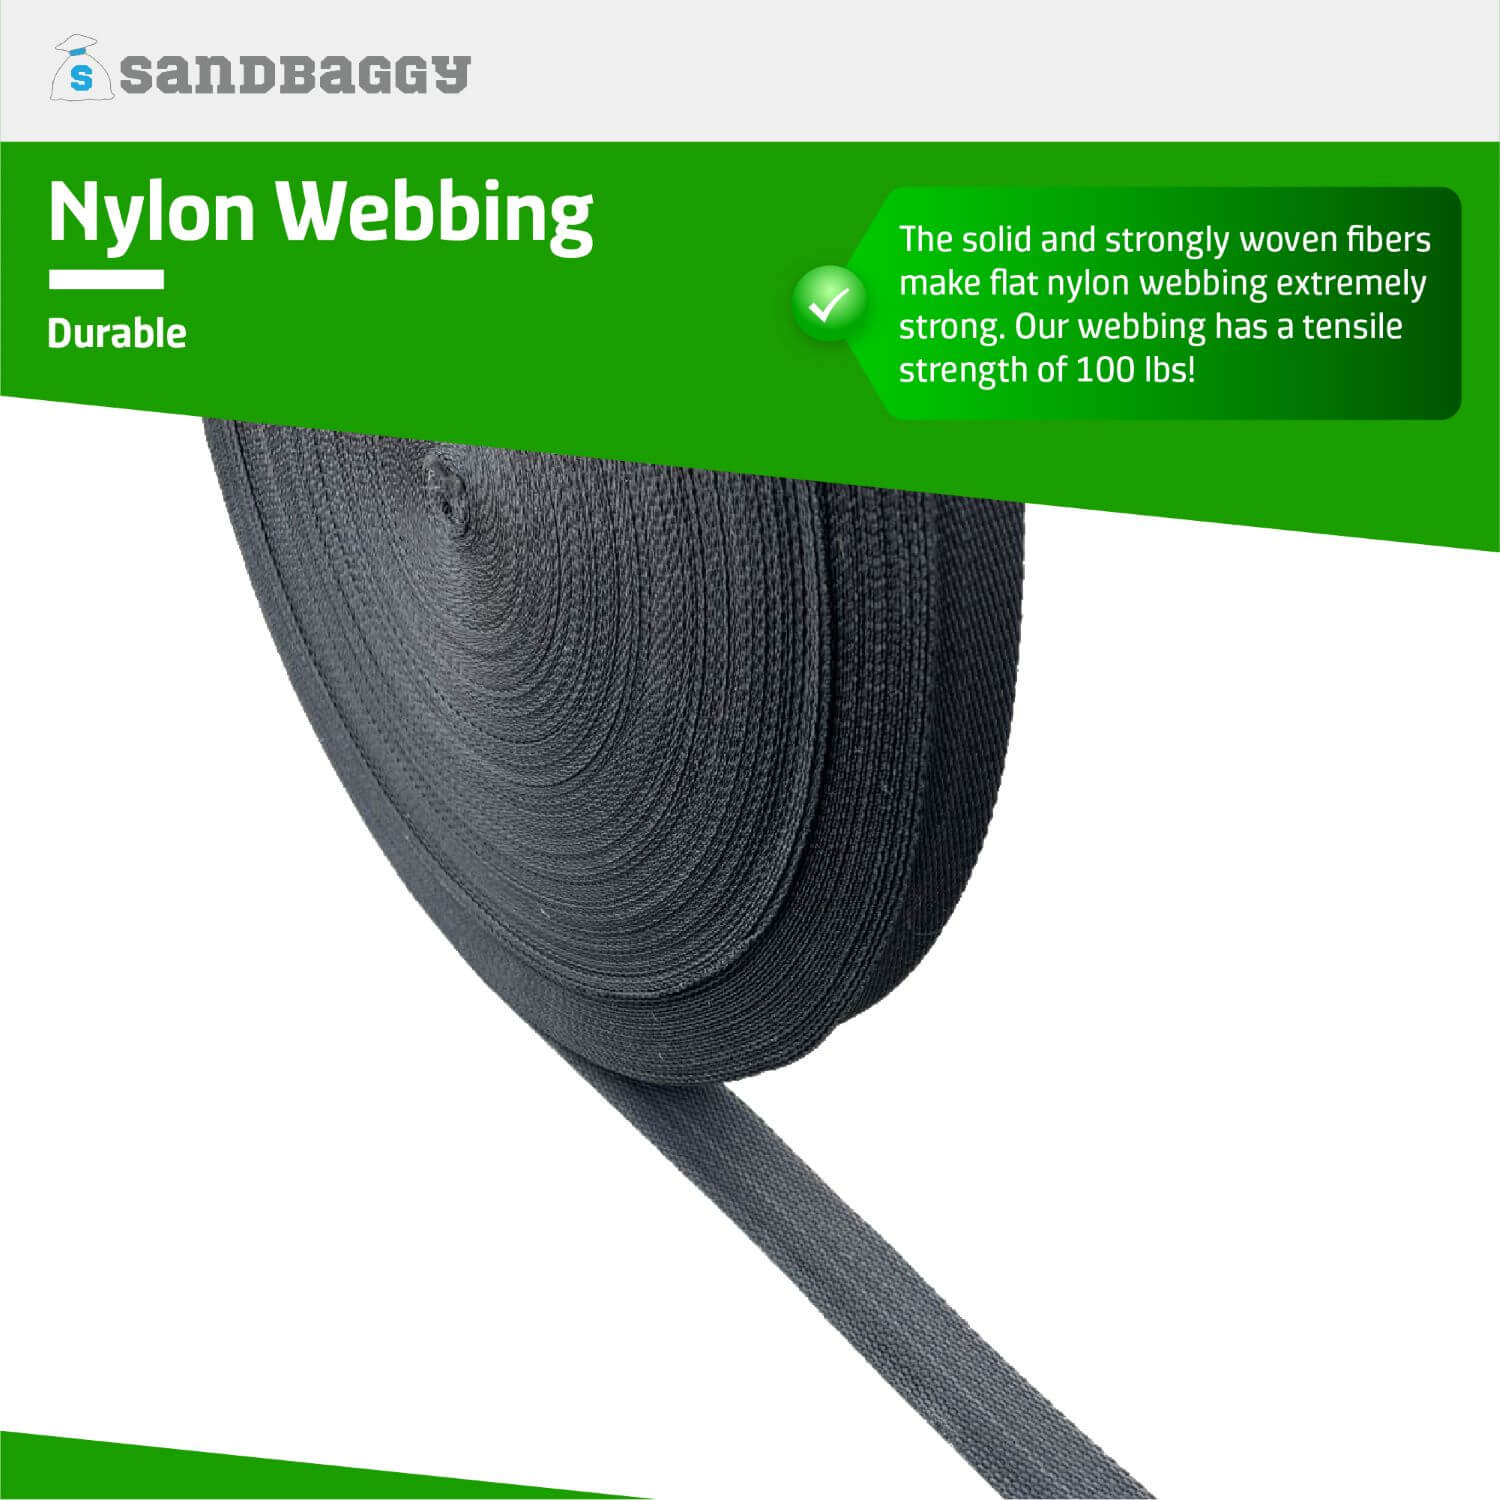 LIUSM 10 Yard Nylon Webbing Strap,Black Durable Flat Straps for Outdoor/DIY Repair